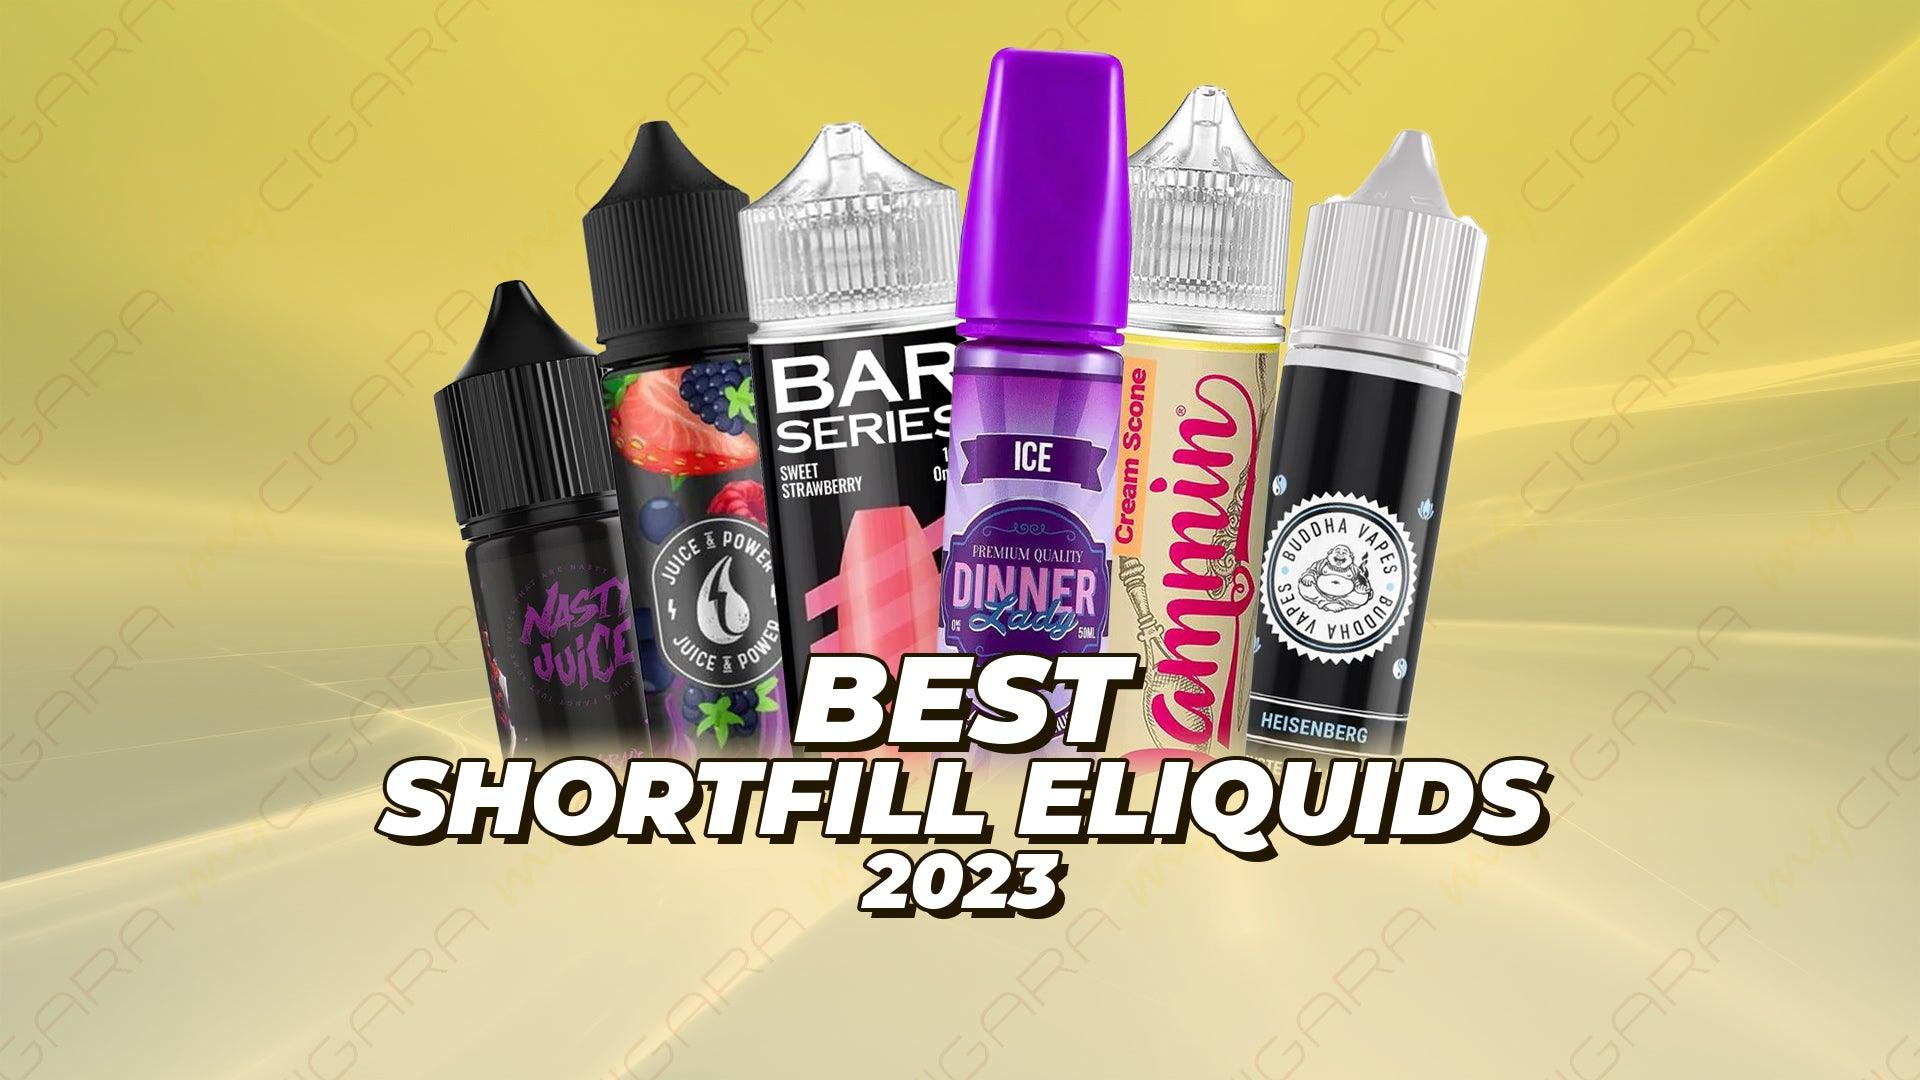 Best Shortfill Eliquids 2023